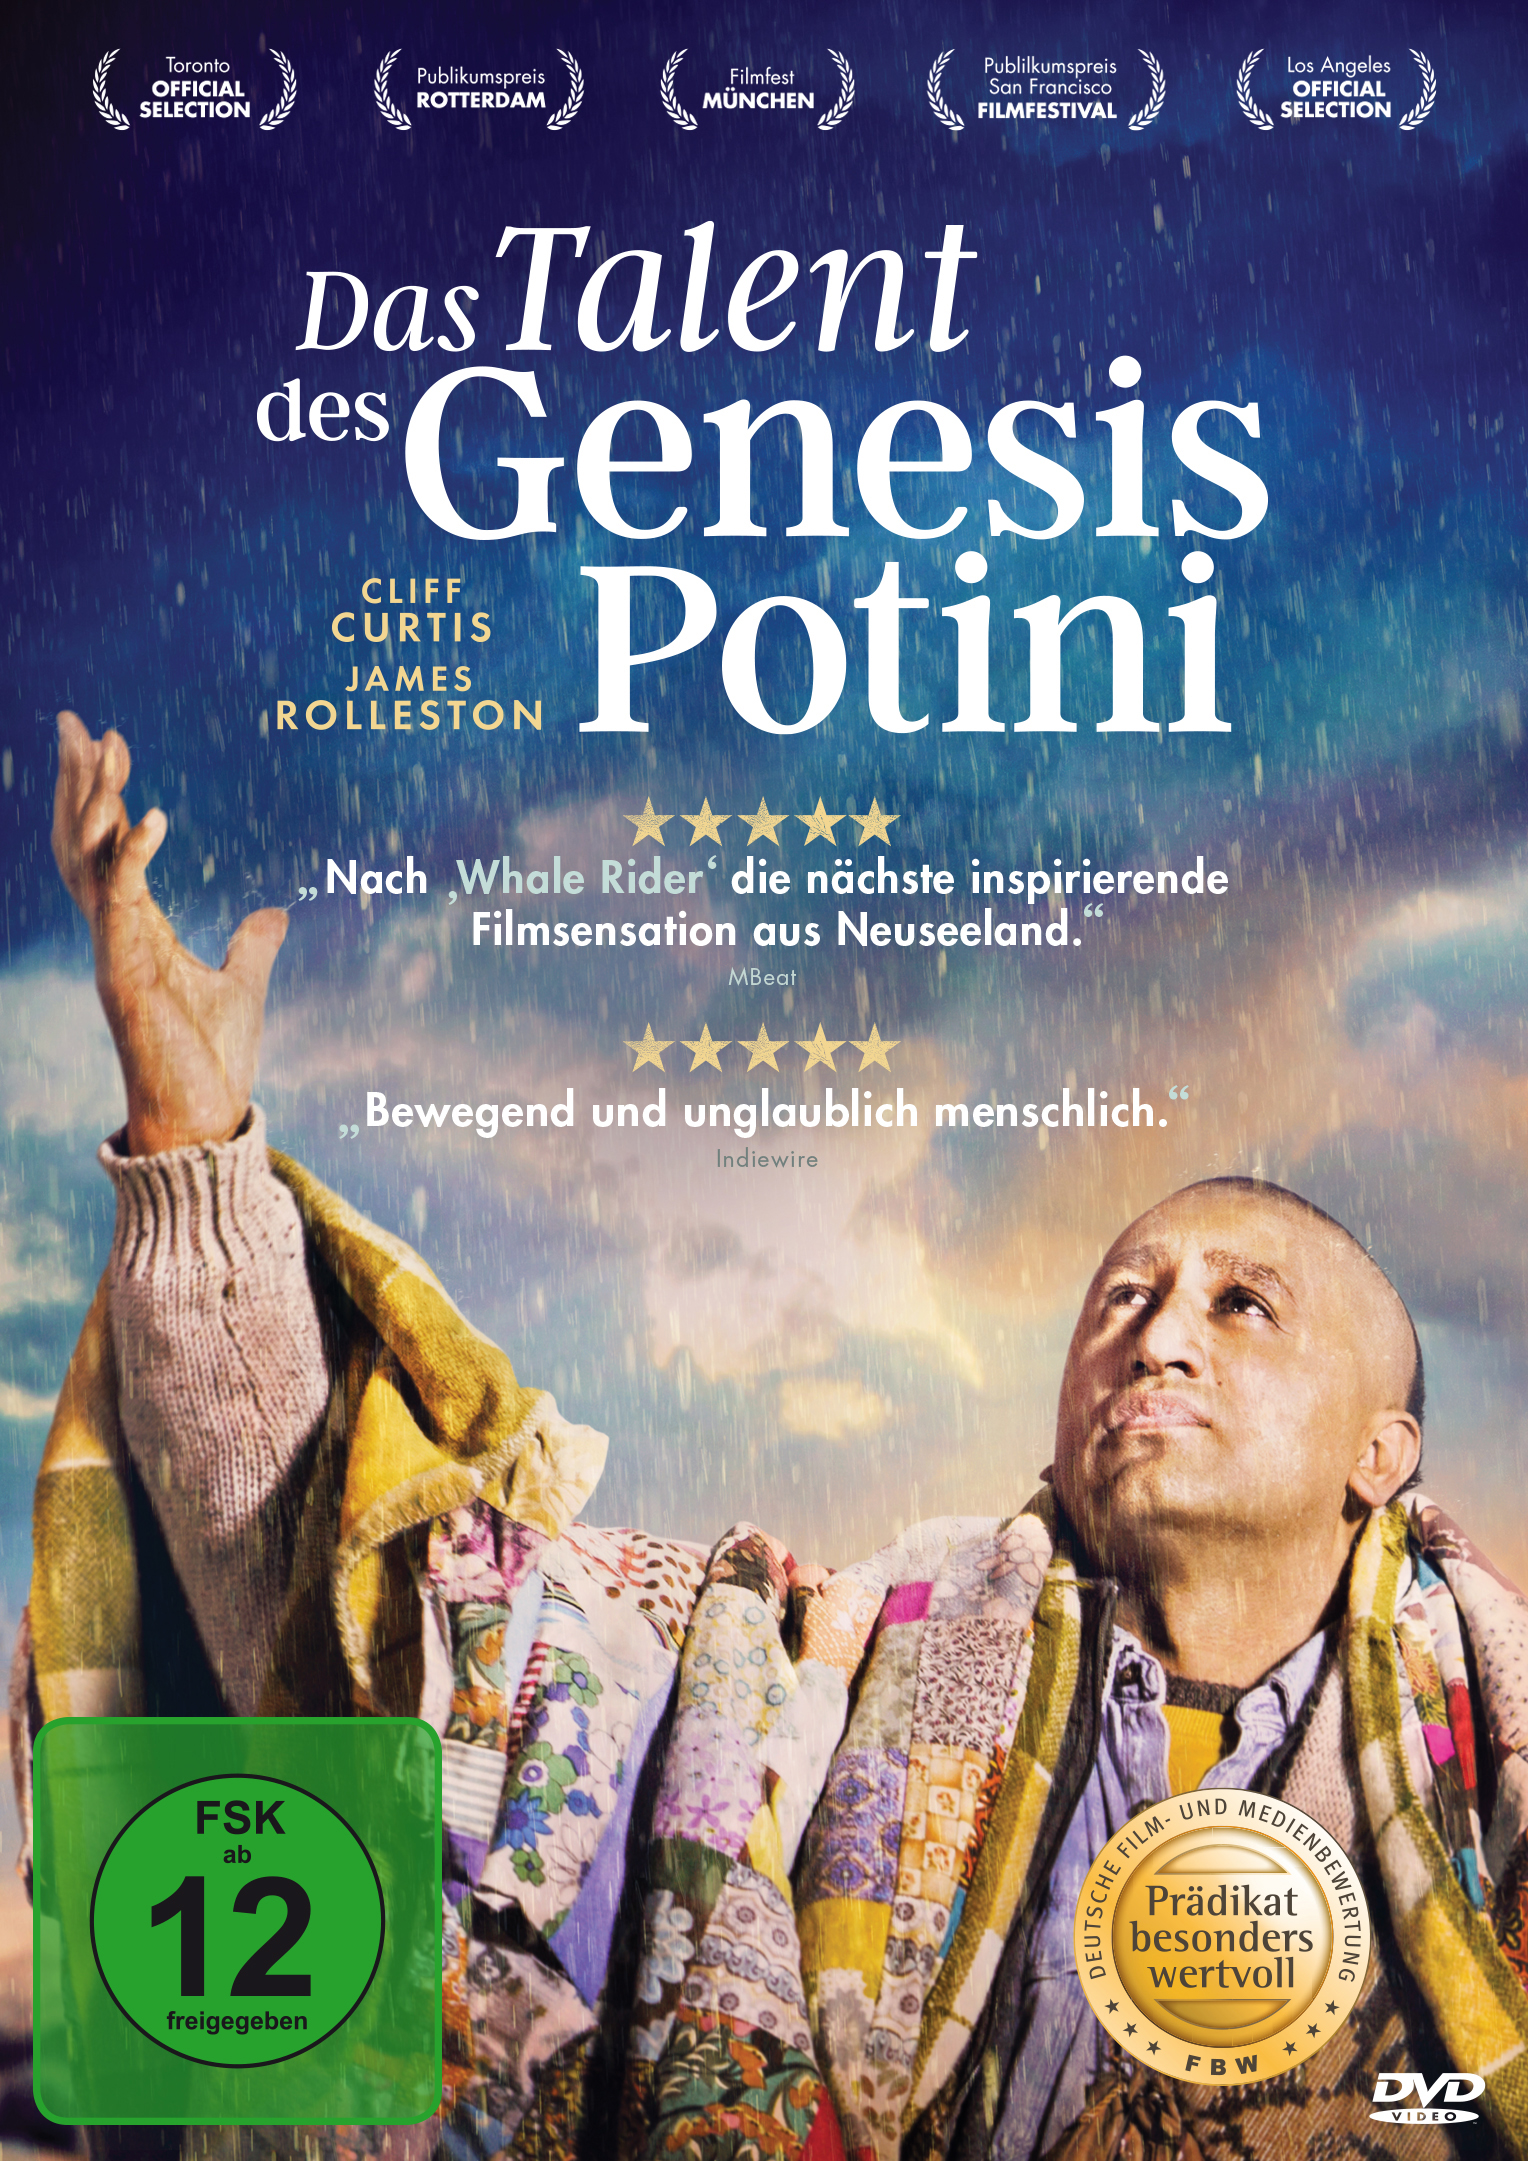 Das Talent des Potini Genesis DVD